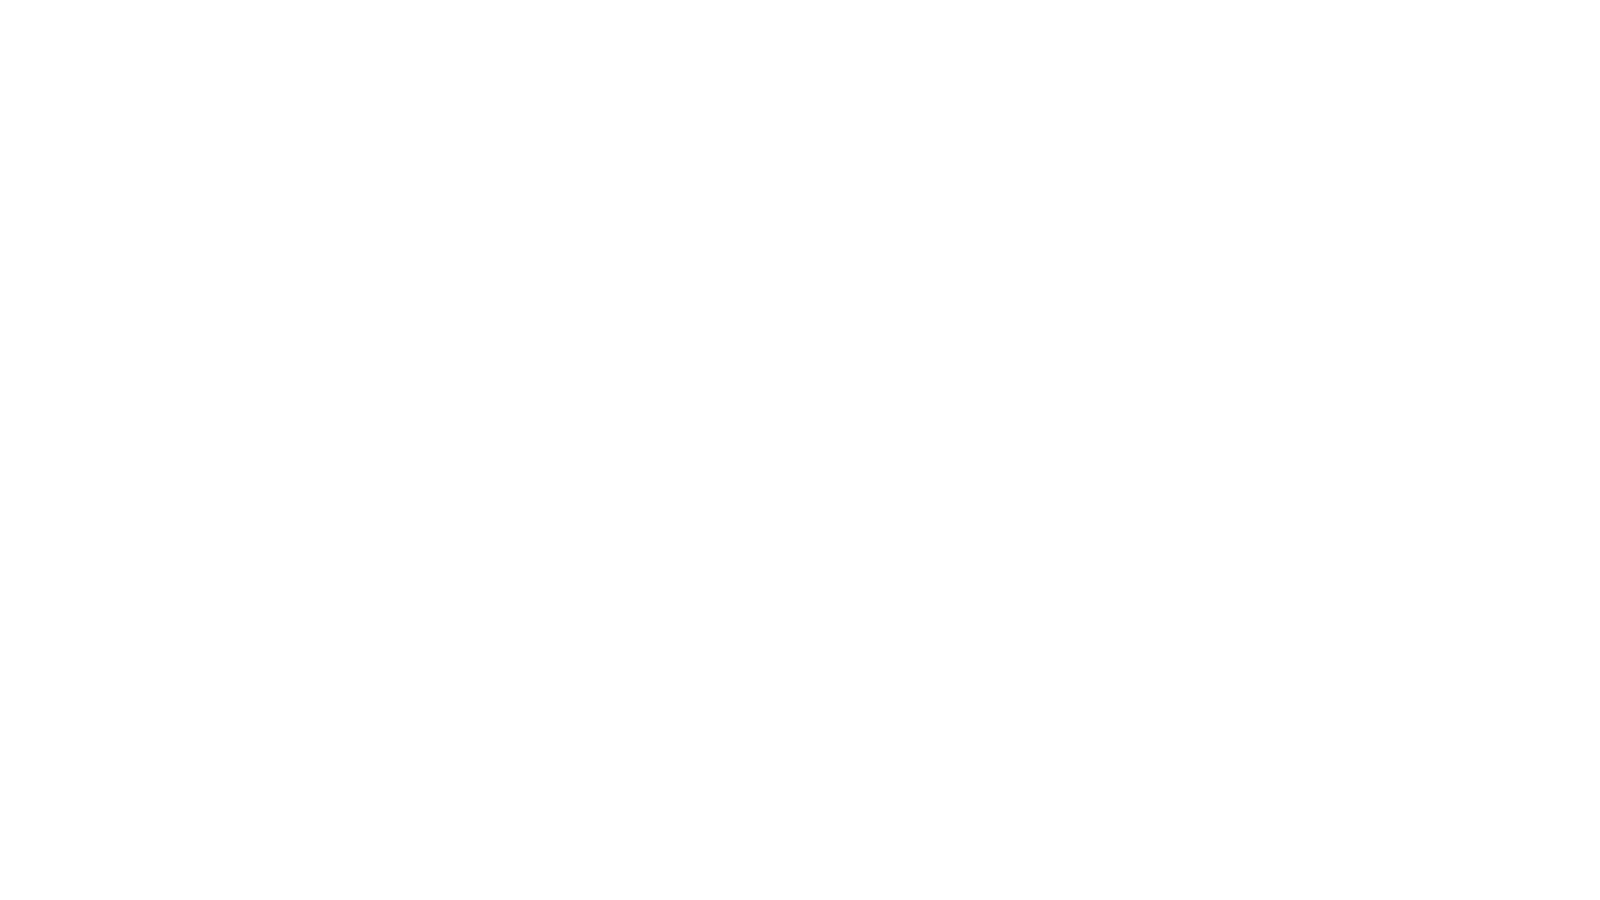 Ahlan Wa Sahlan Ya Ramadhan! We meet again this year, syukur Alhamdulillah. A series of my timelapse work of Shah Alam Mosque/Sultan Salahuddin Abdul Aziz Mosque. © www.fakruljamil.com

Soundtrack:
Provided to YouTube by YouTube Audio Library
Lifelong · Anno Domini Beats
℗ YouTube Audio Library